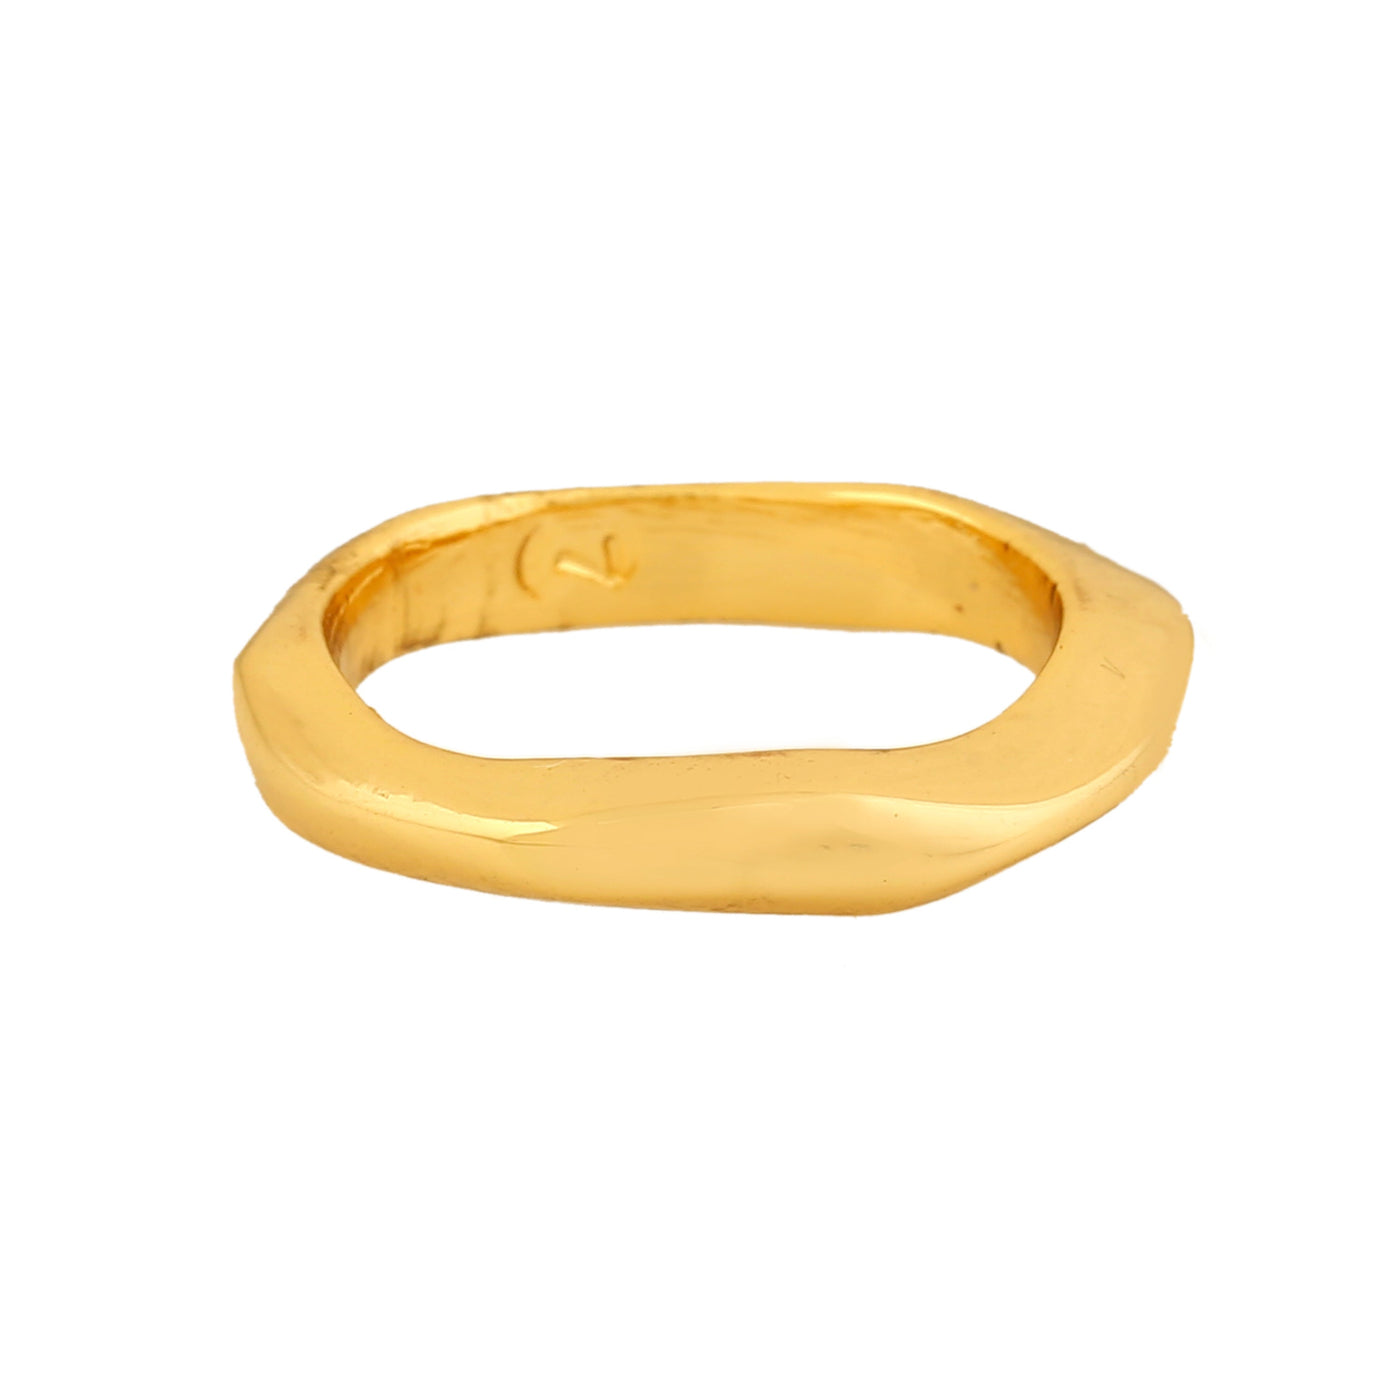 Estele Gold Plated Gorgeous Finger Ring for Women